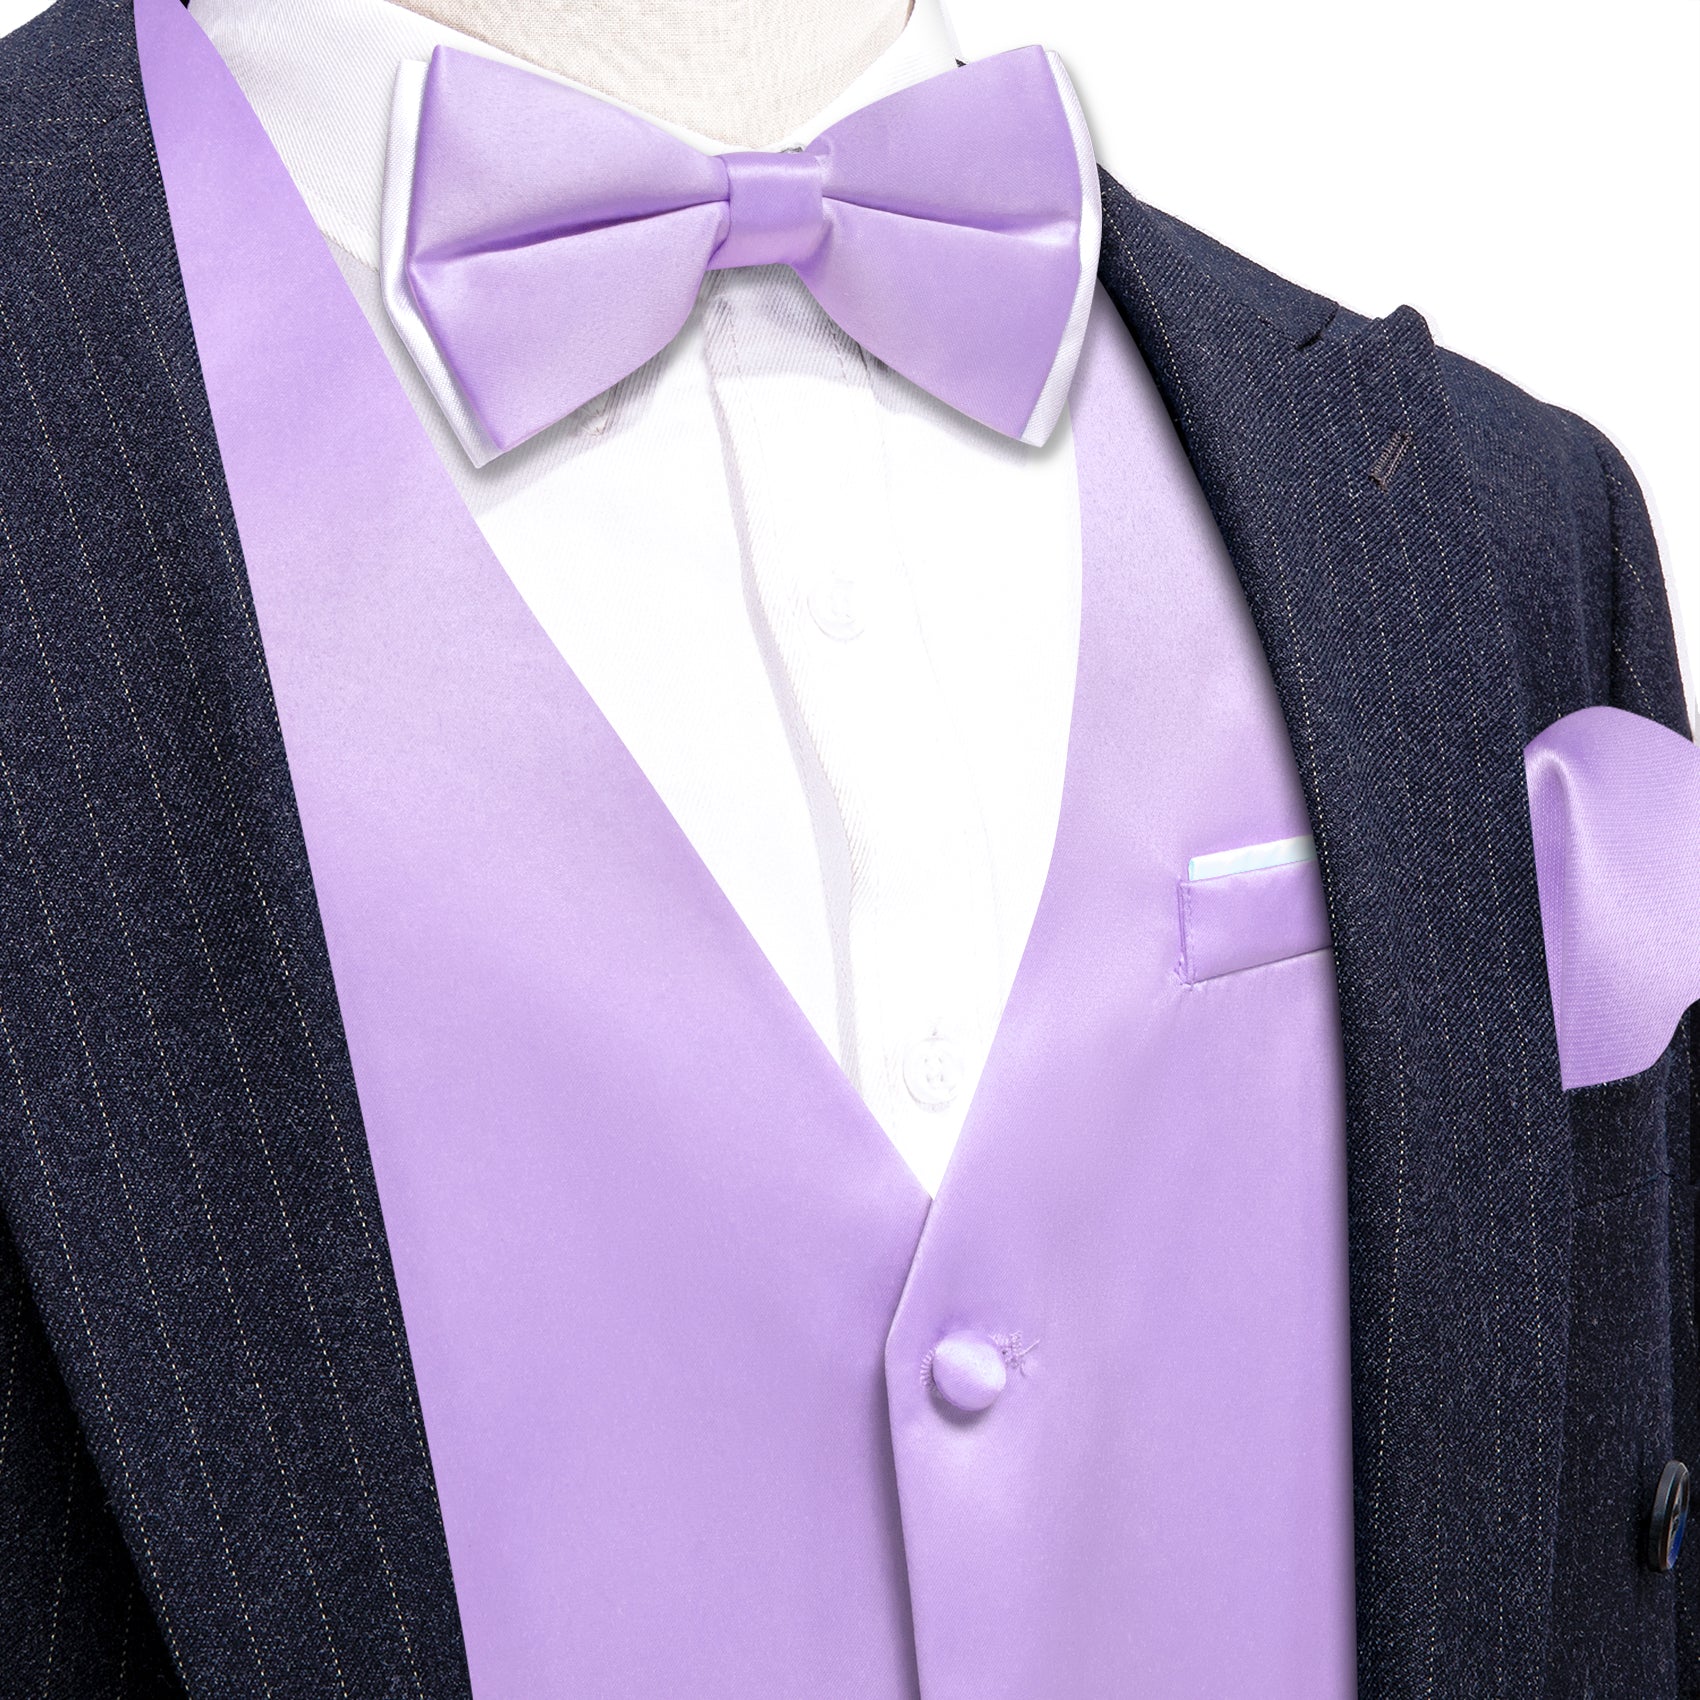 Mist Violet Solid Silk Vest Bowtie Pocket Square Cufflinks Set